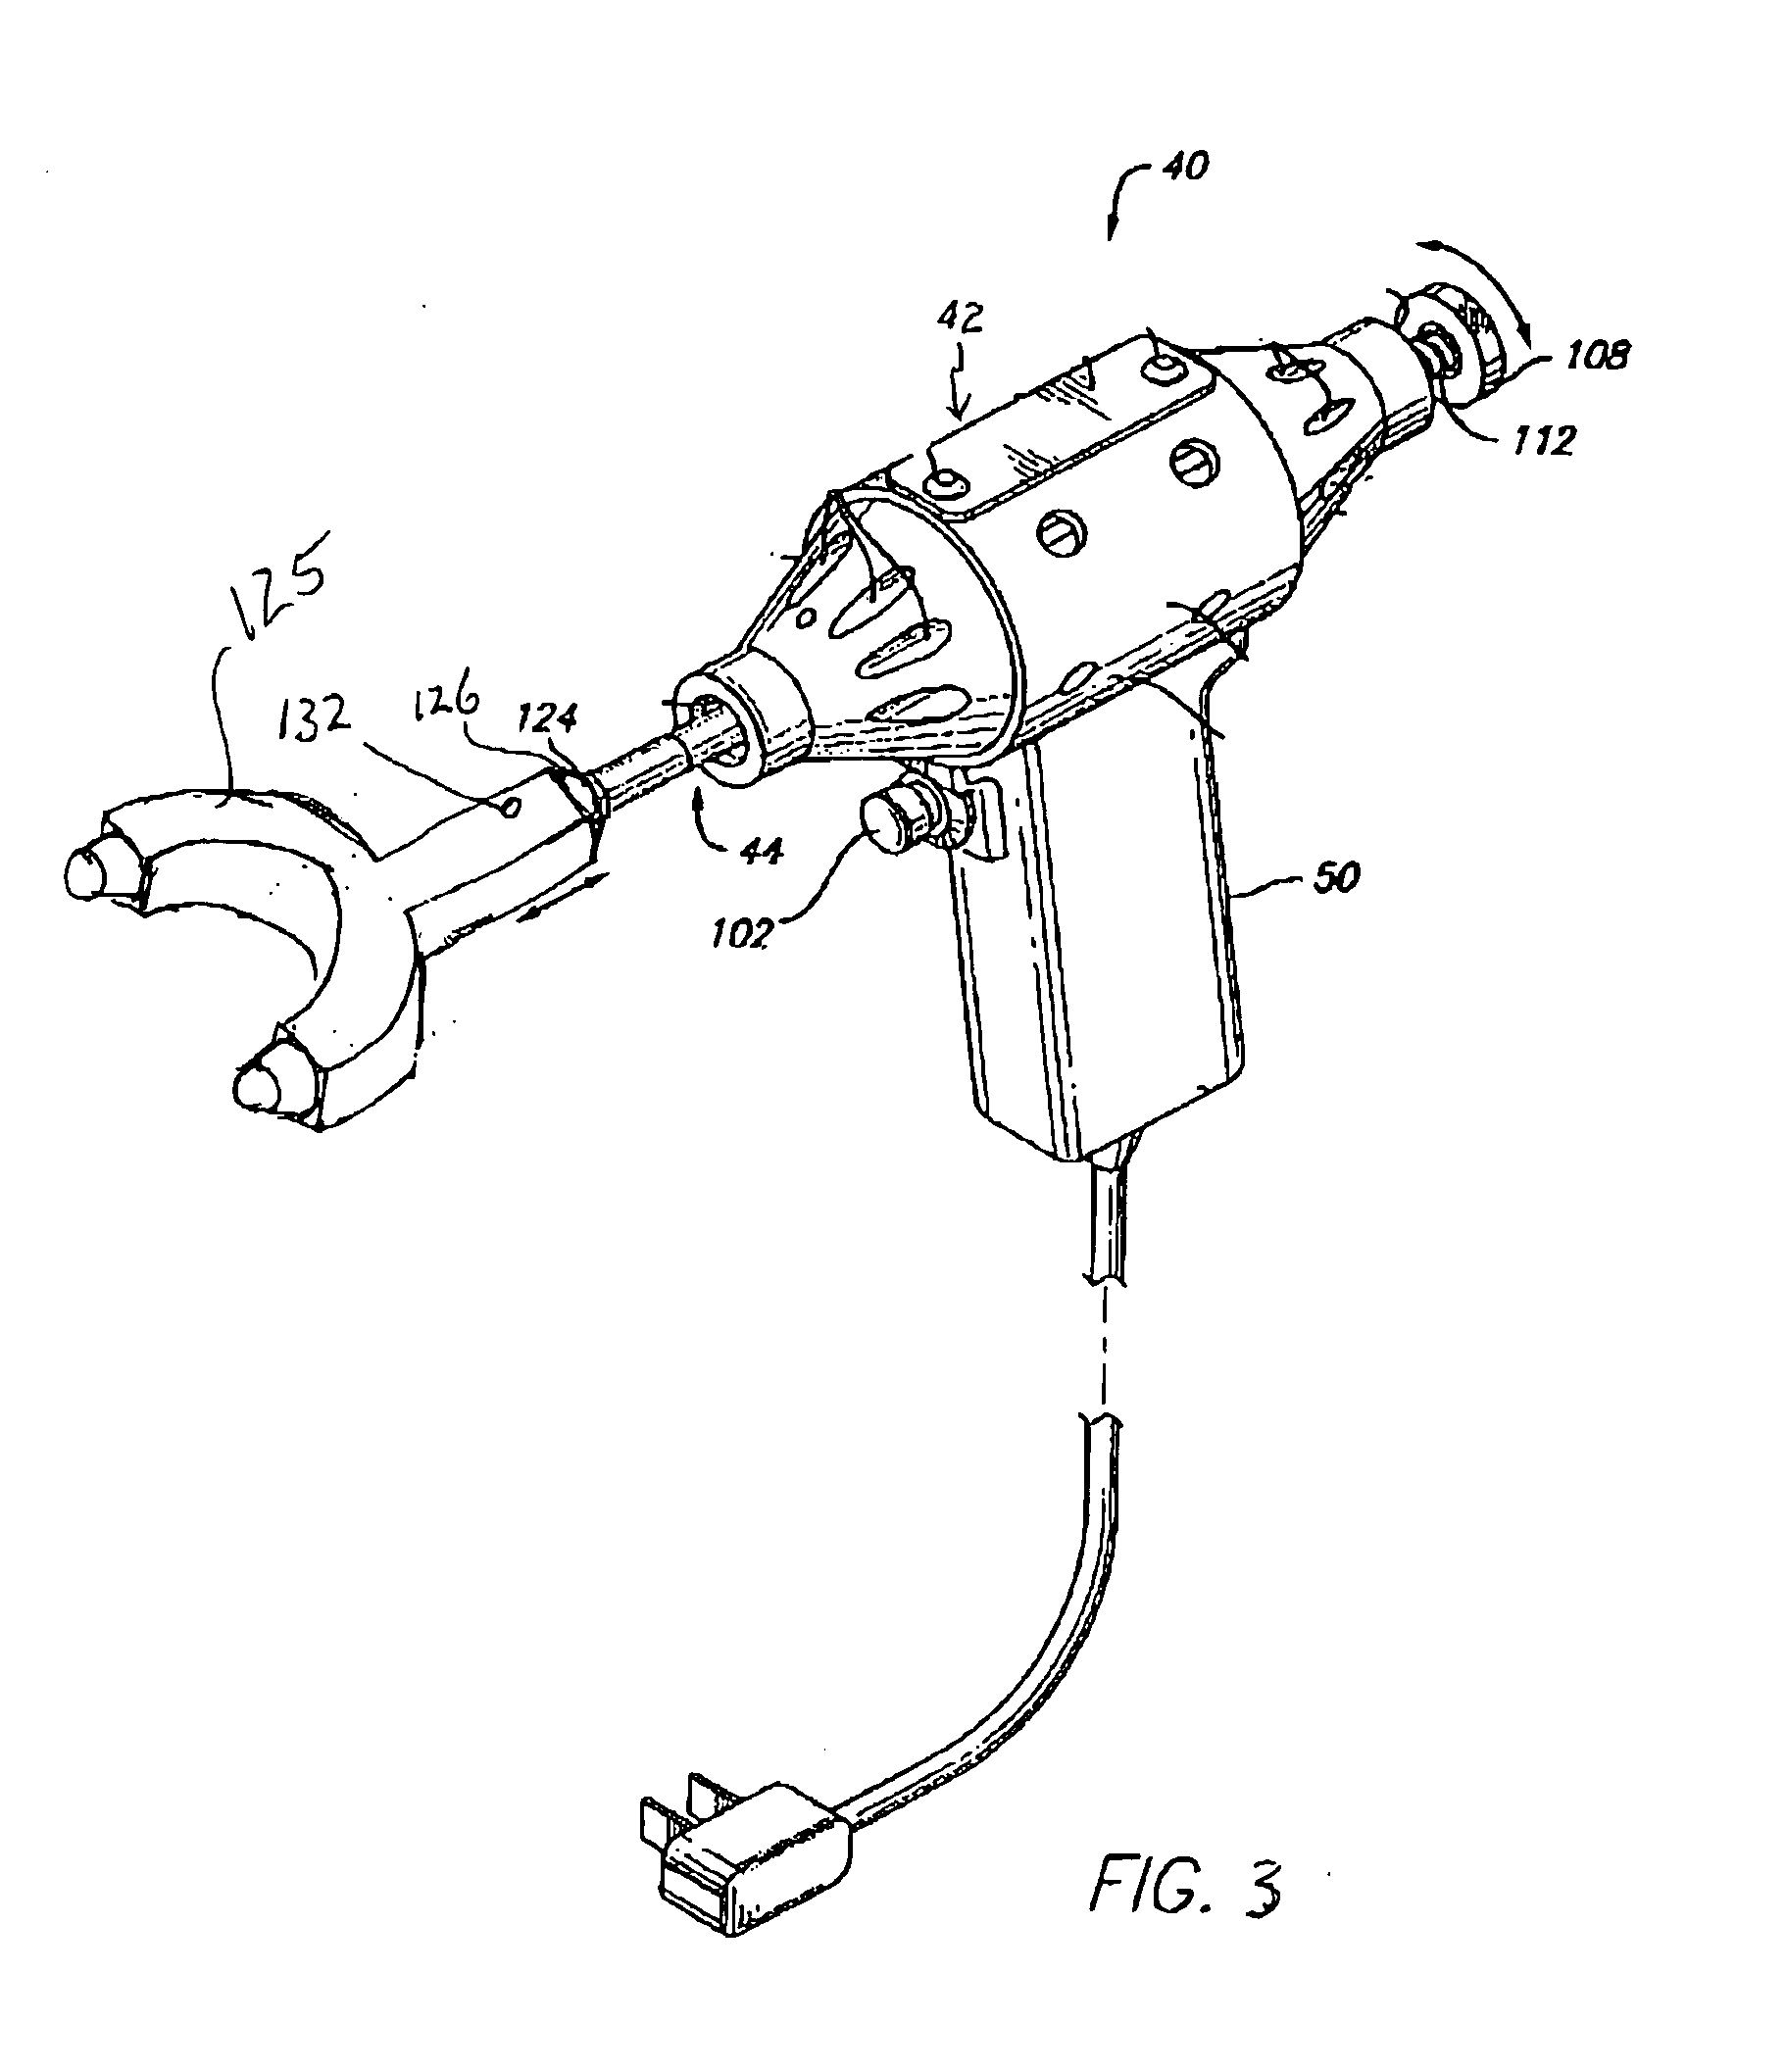 Chiropractic adjustor apparatus with rotation hub